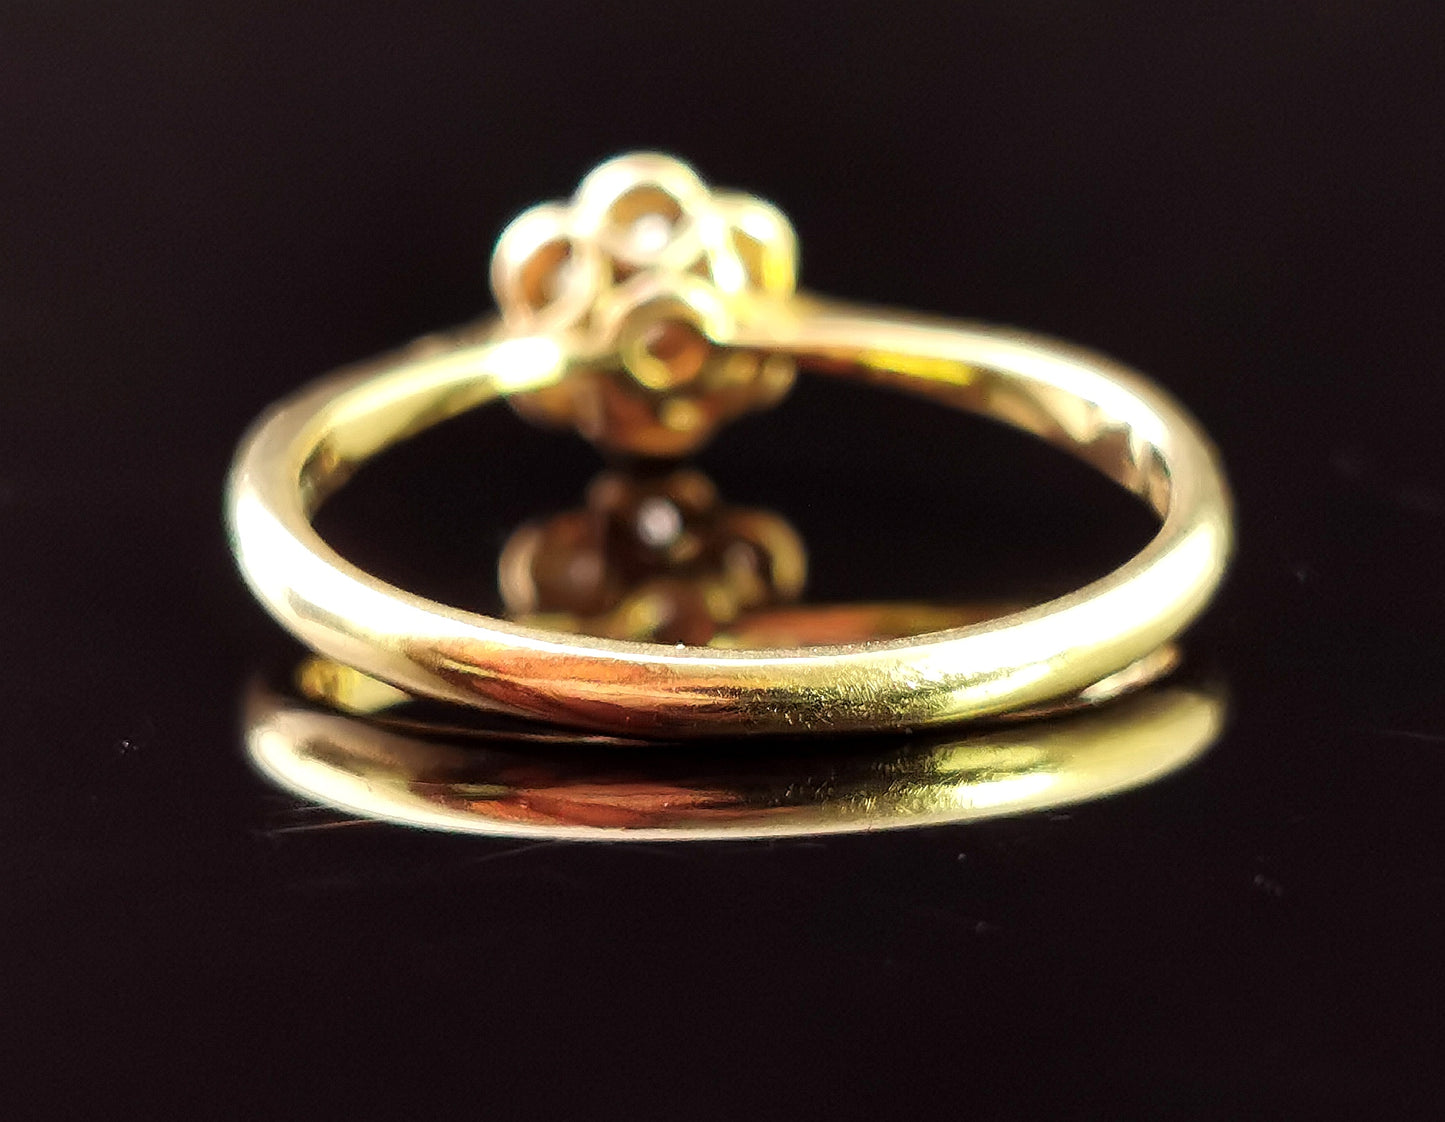 Antique diamond daisy ring, 18ct gold and platinum